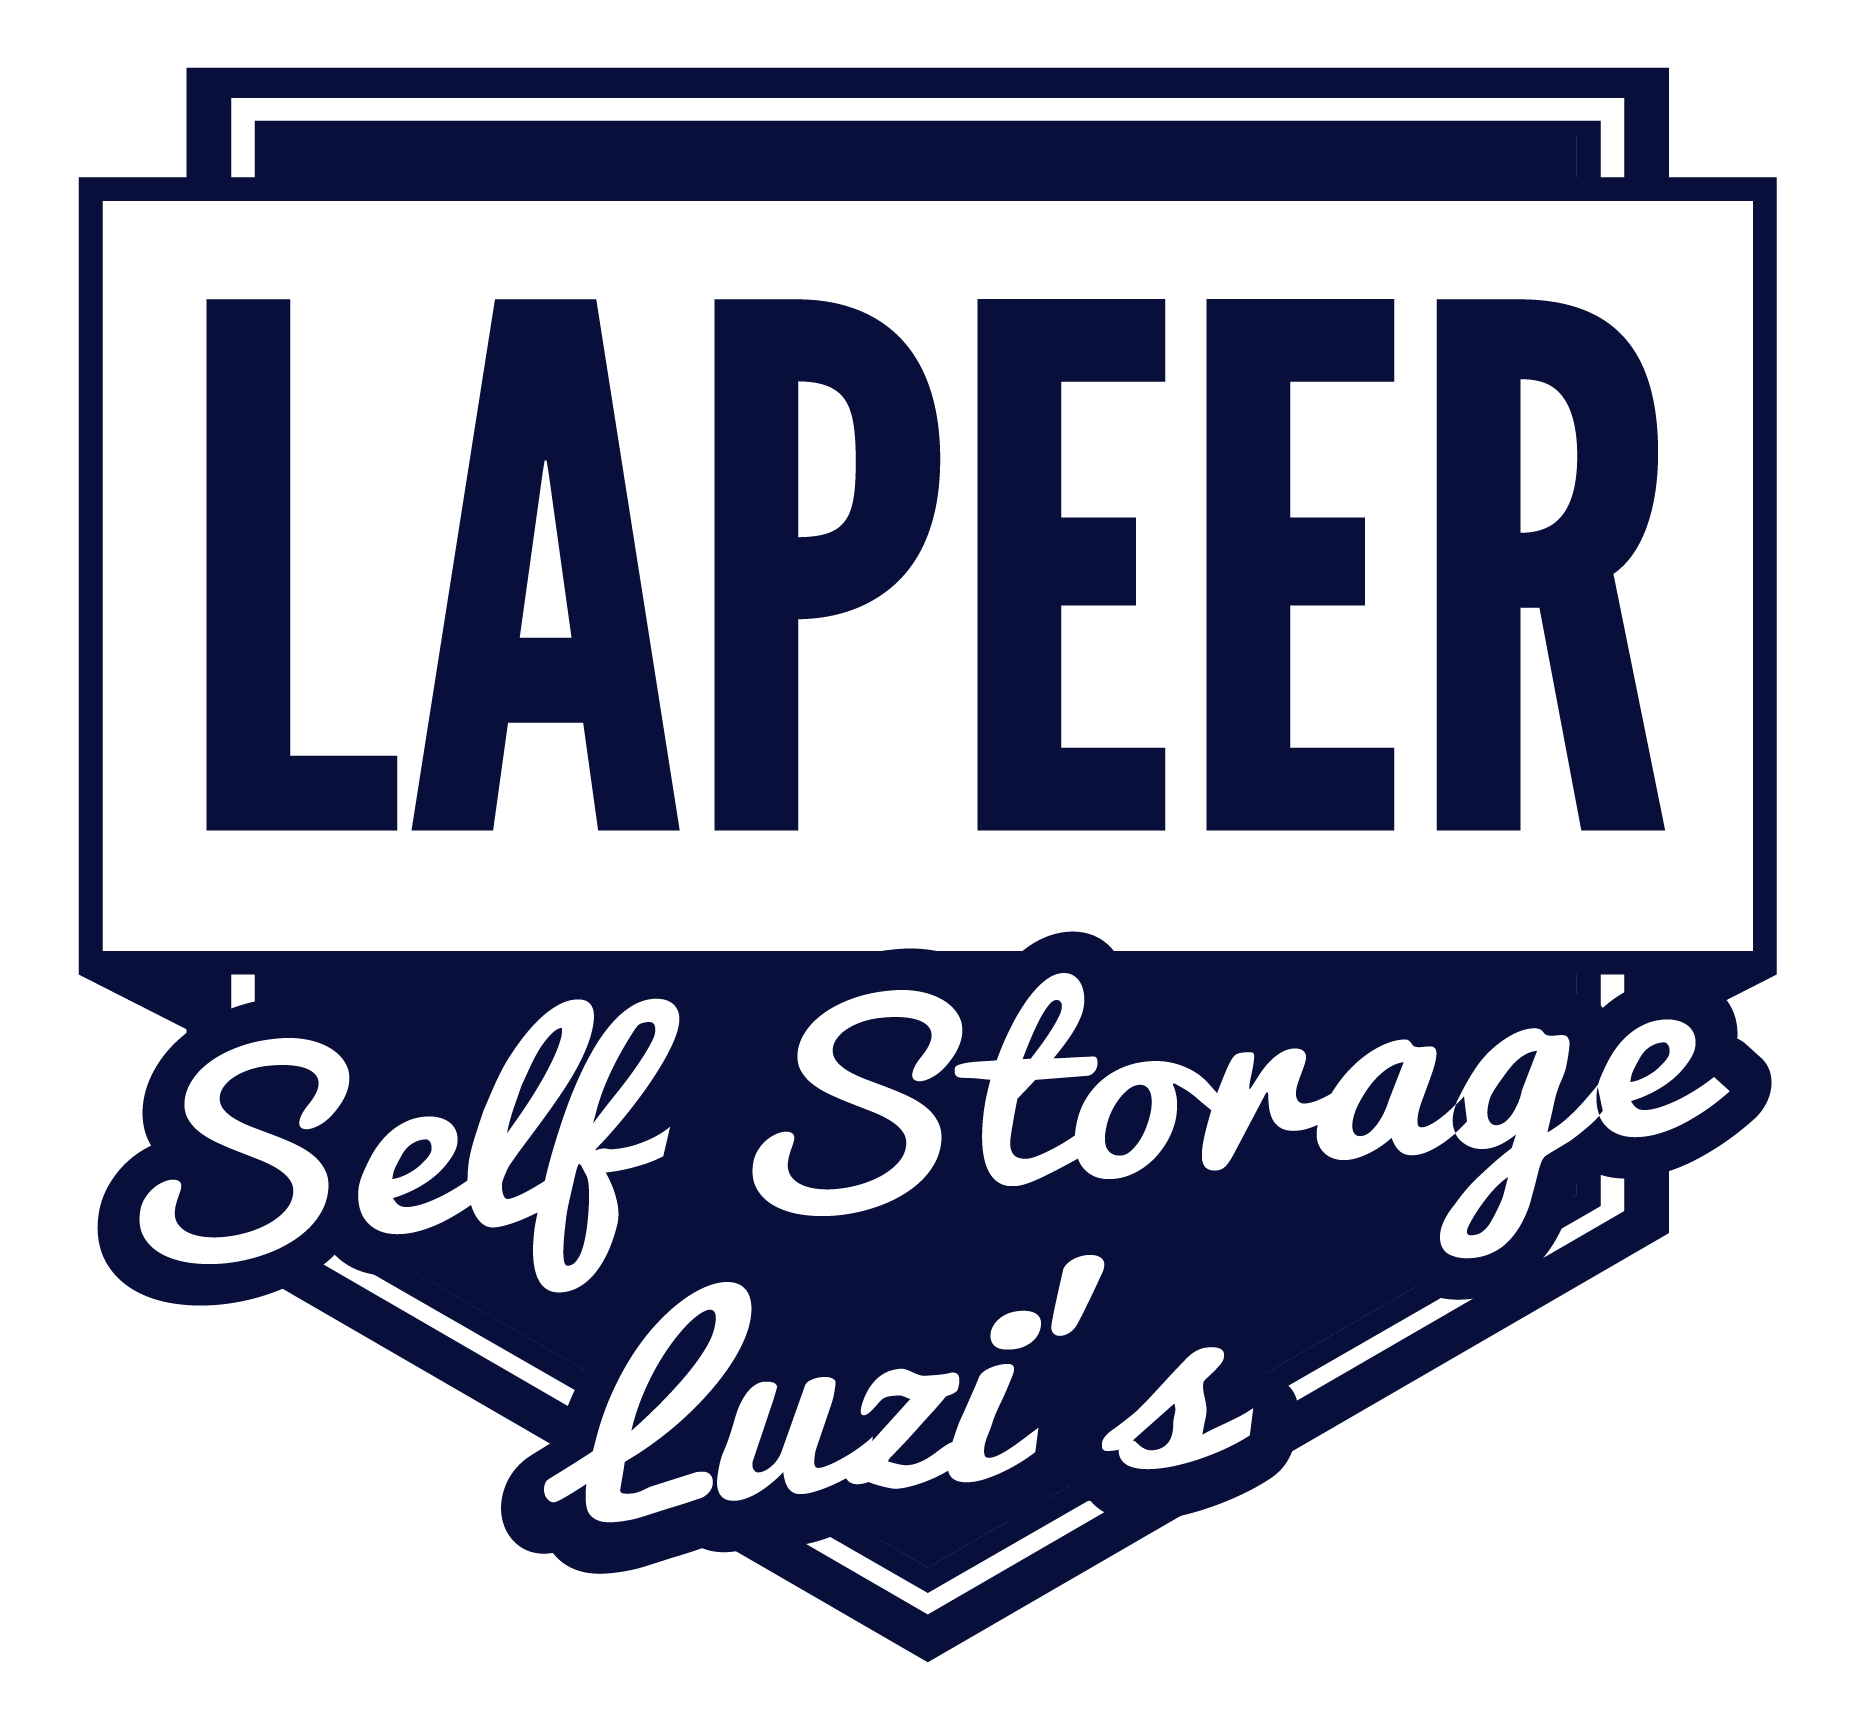 Lapeer Self Storage - Luzi's